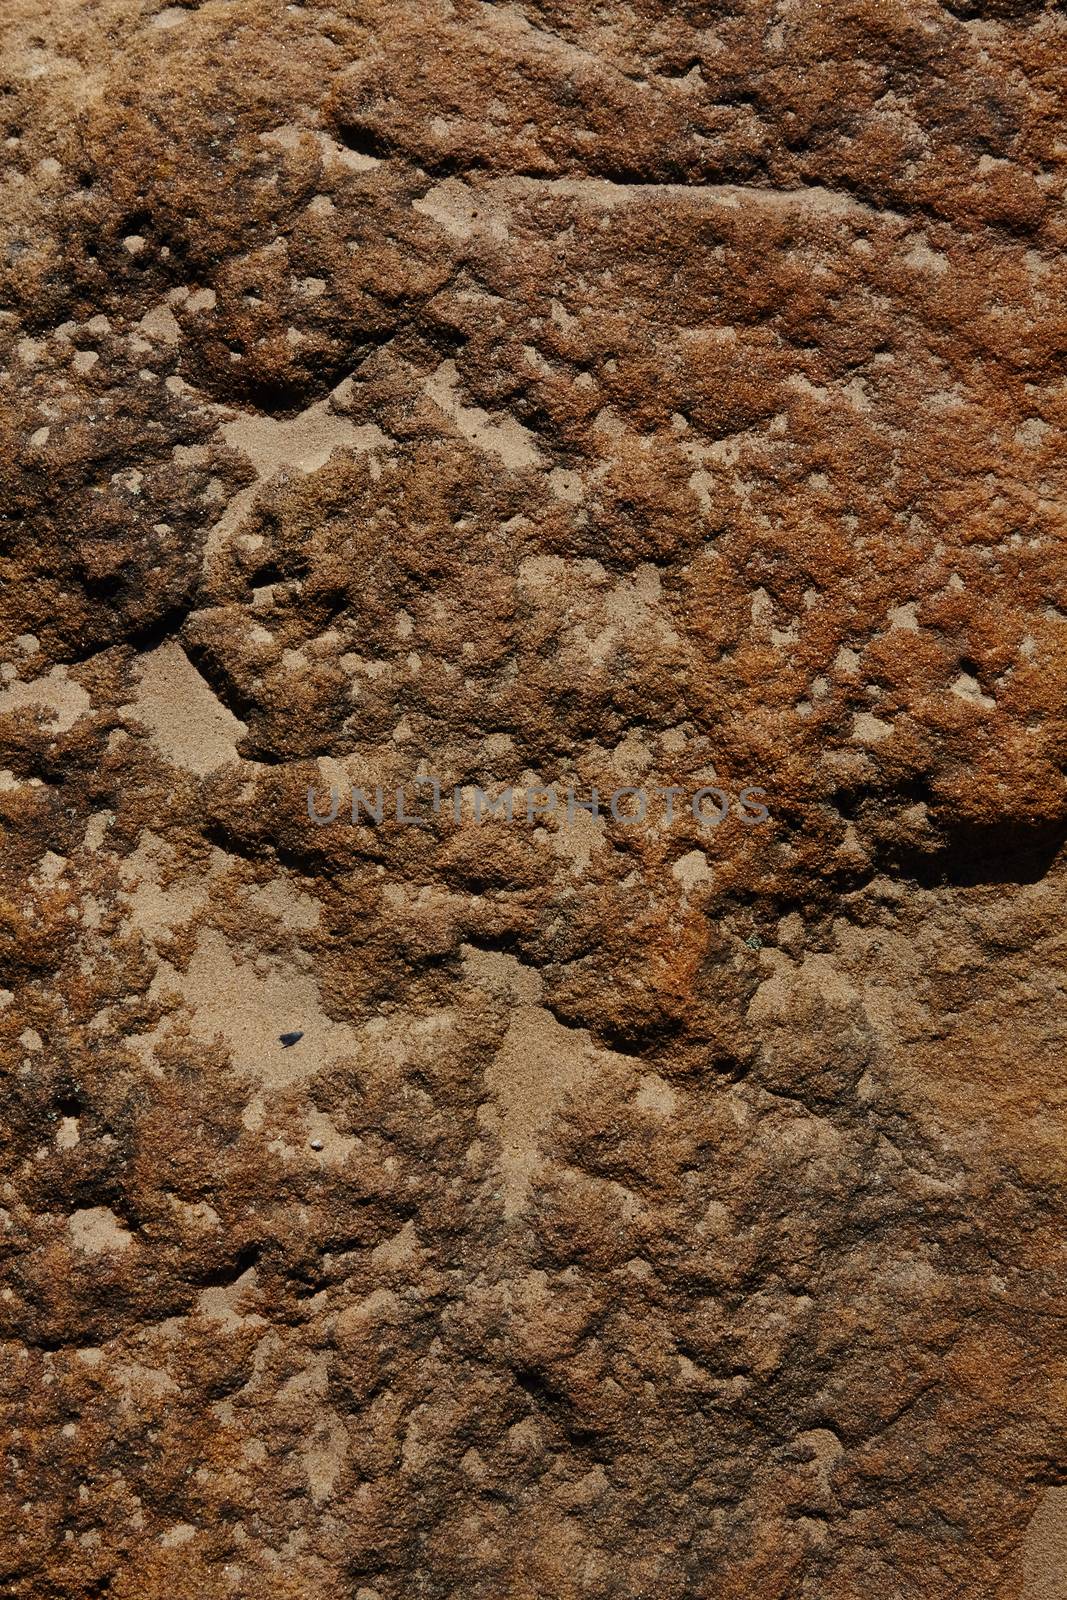 surface of the stone by sarymsakov